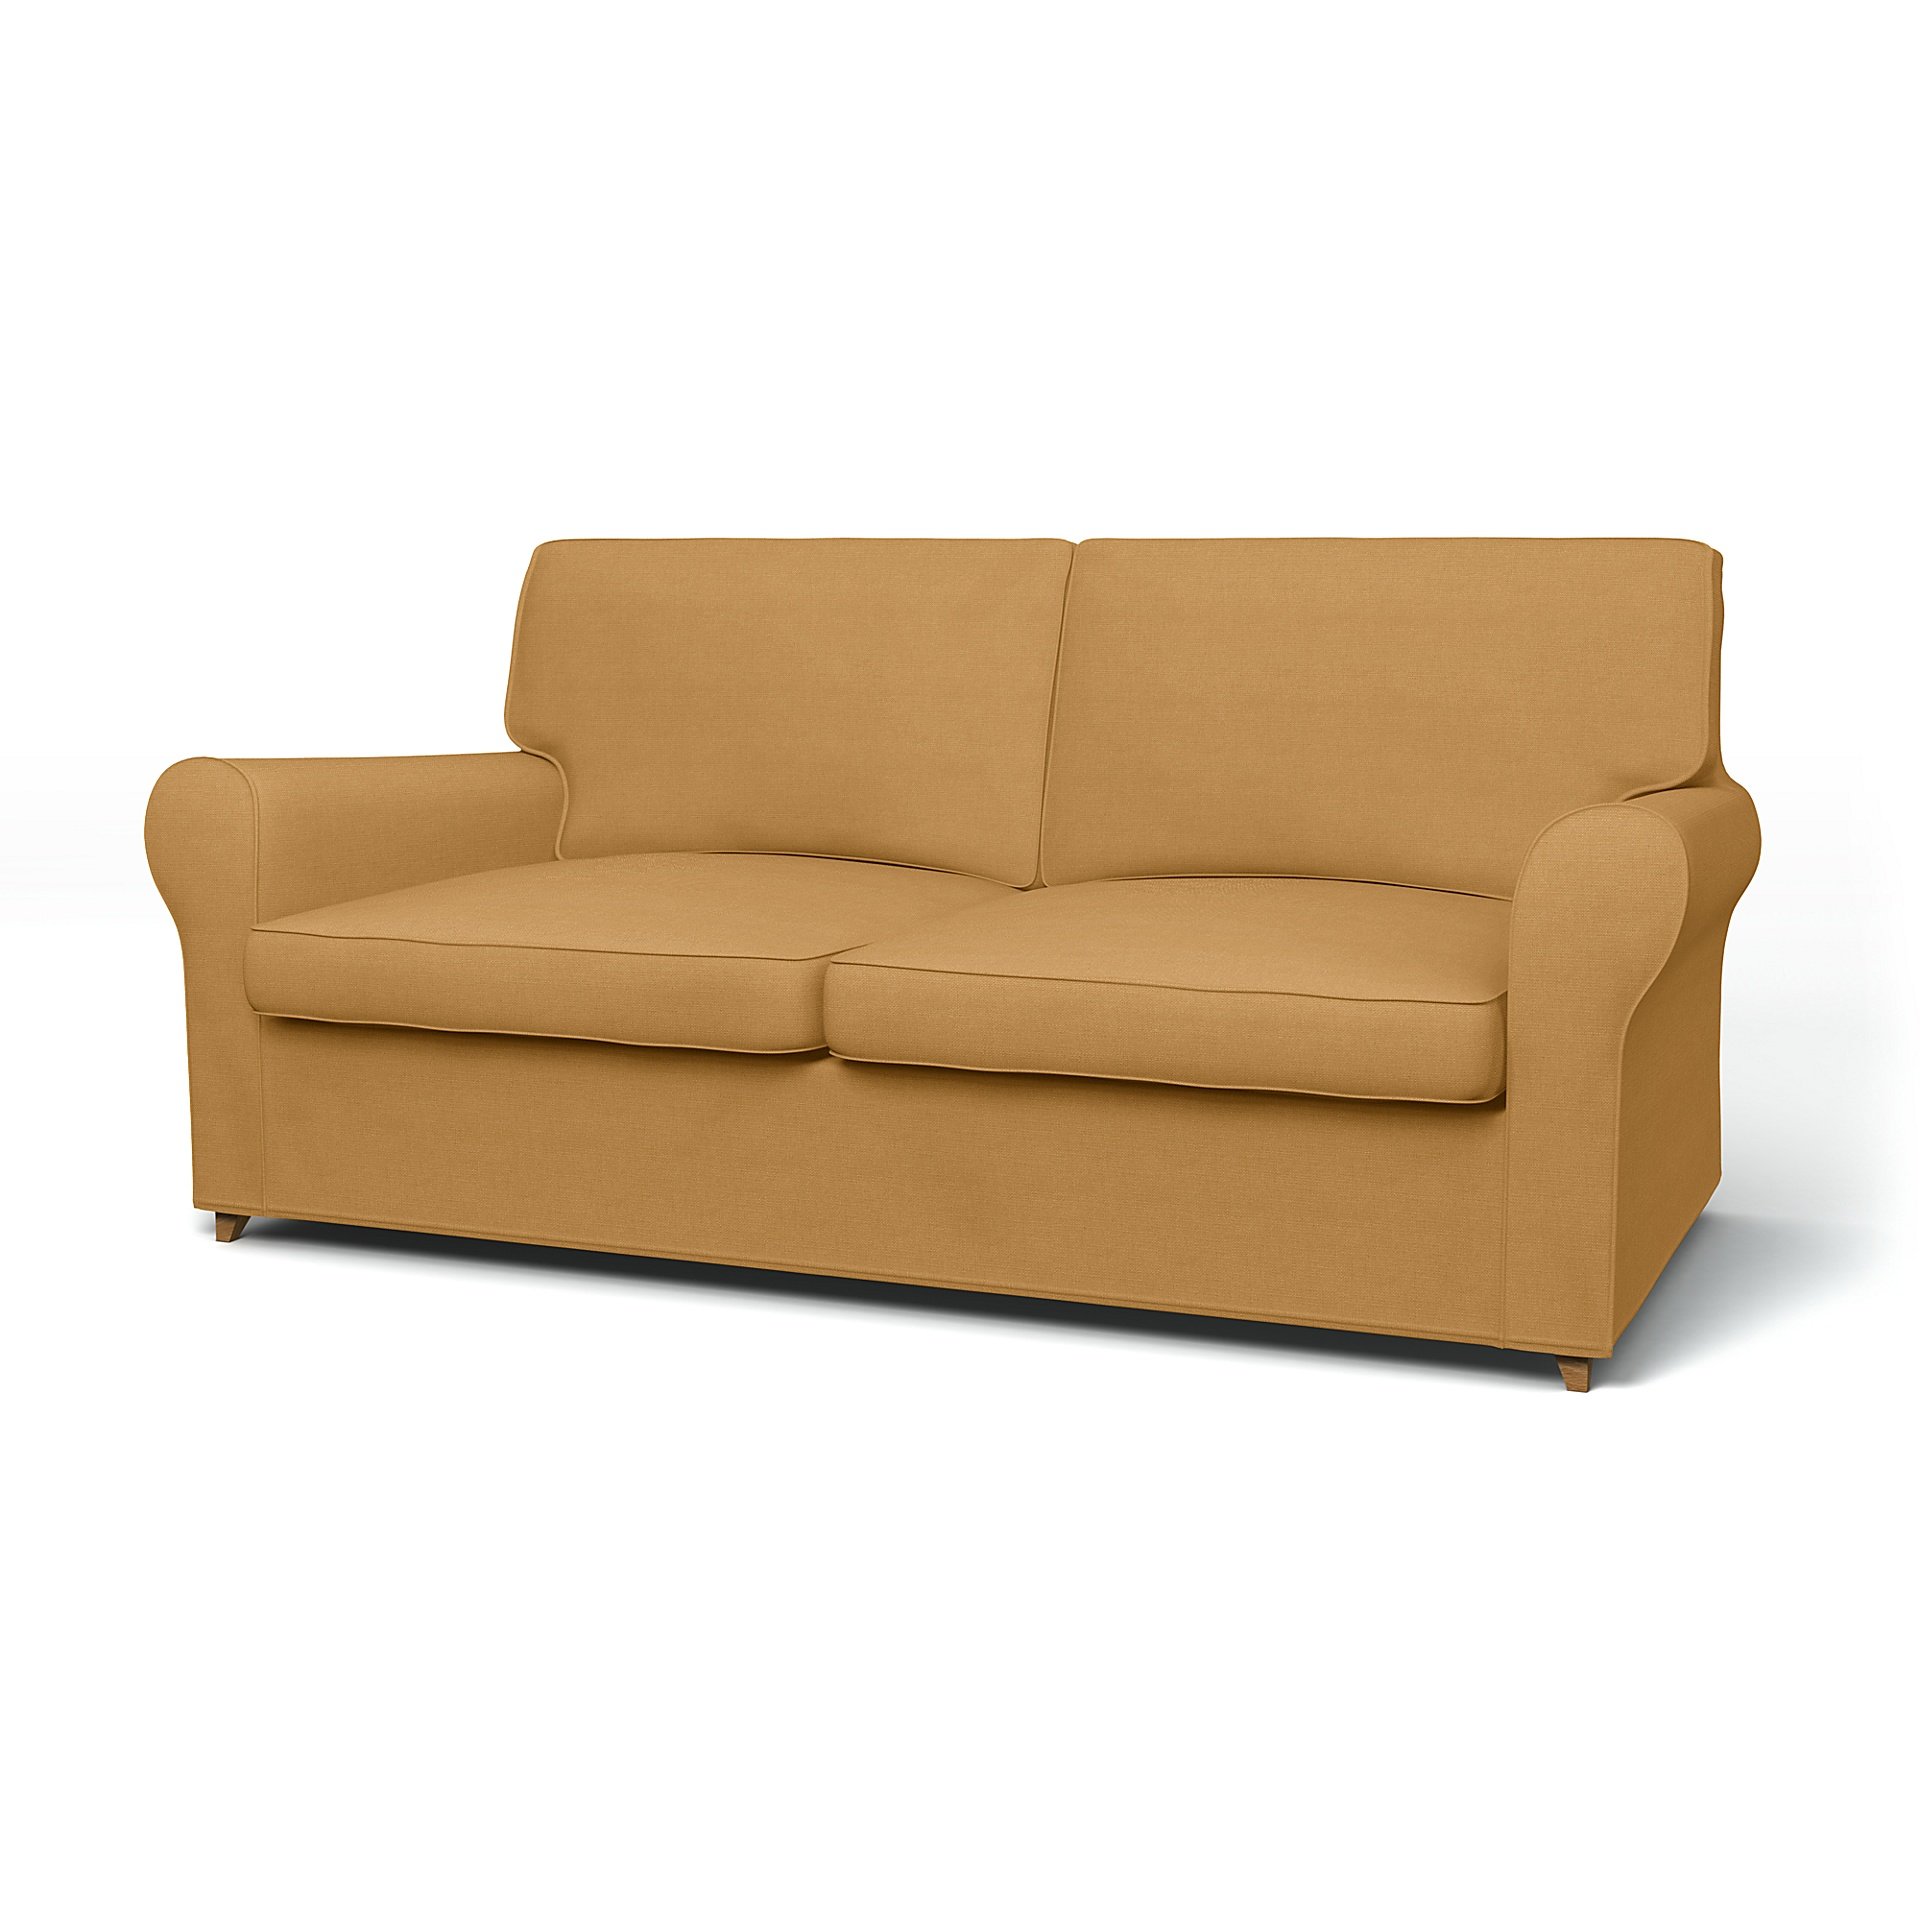 IKEA - Angby Sofa Bed Cover, Mustard, Linen - Bemz